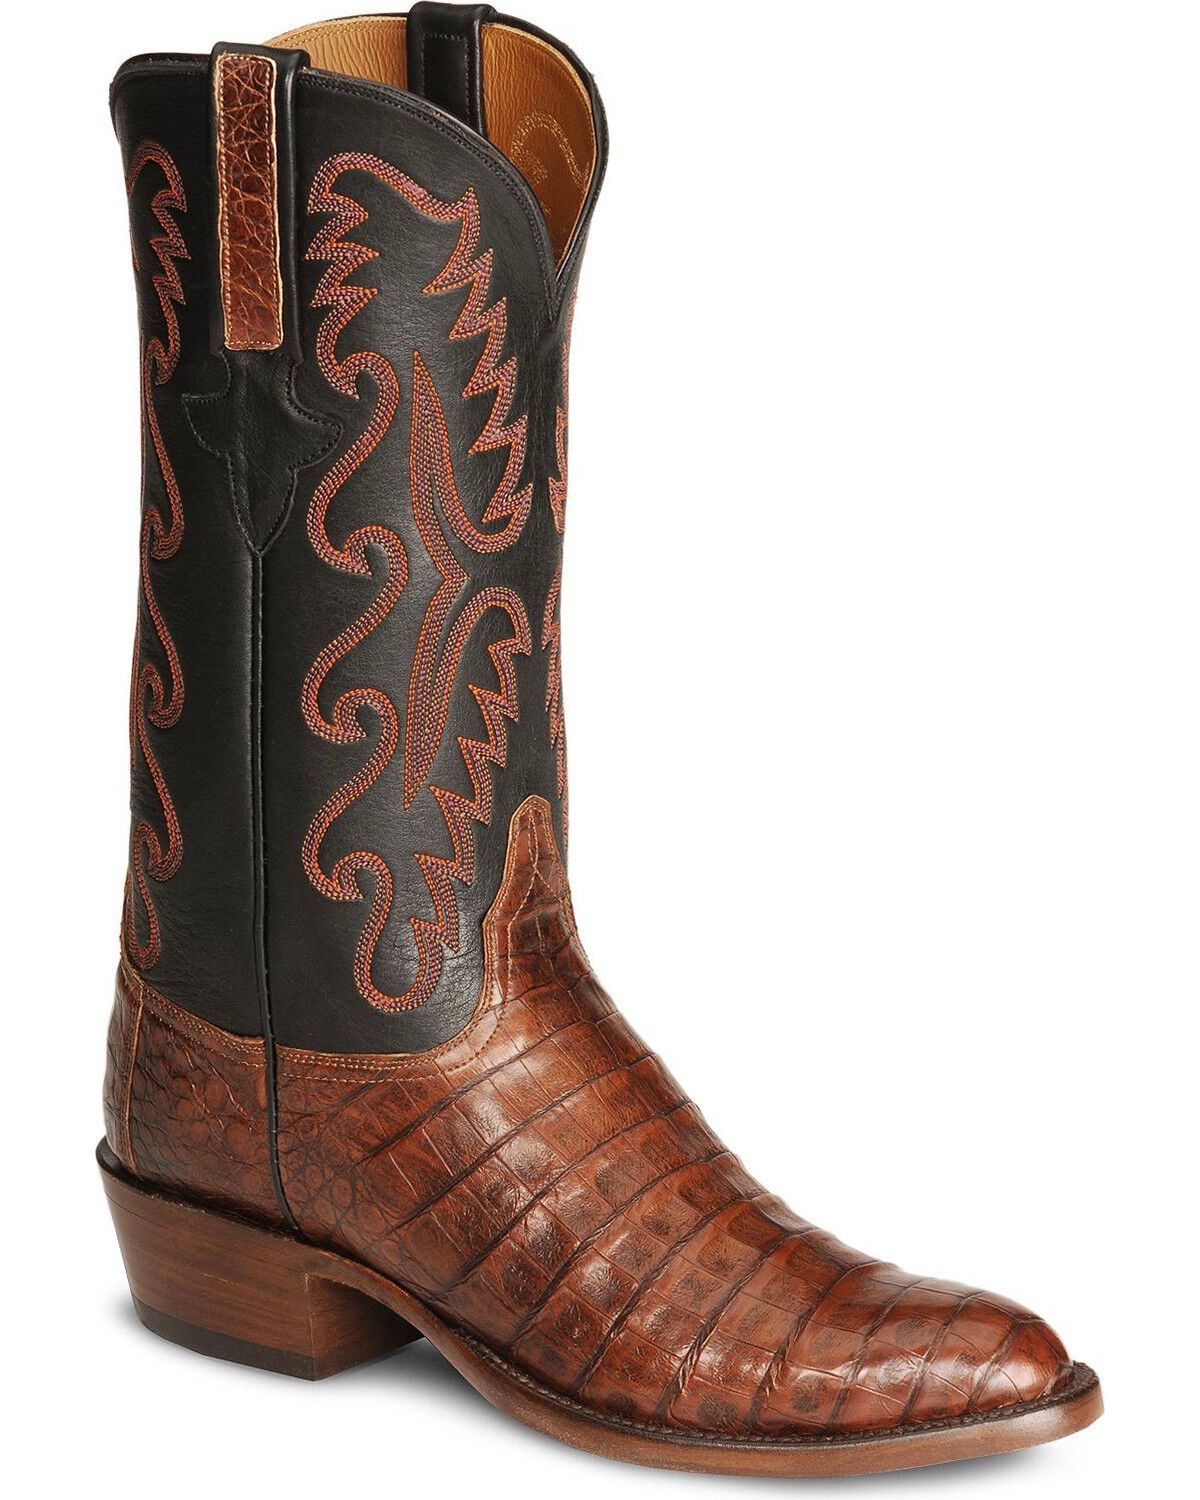 cowboy boots size 14 wide